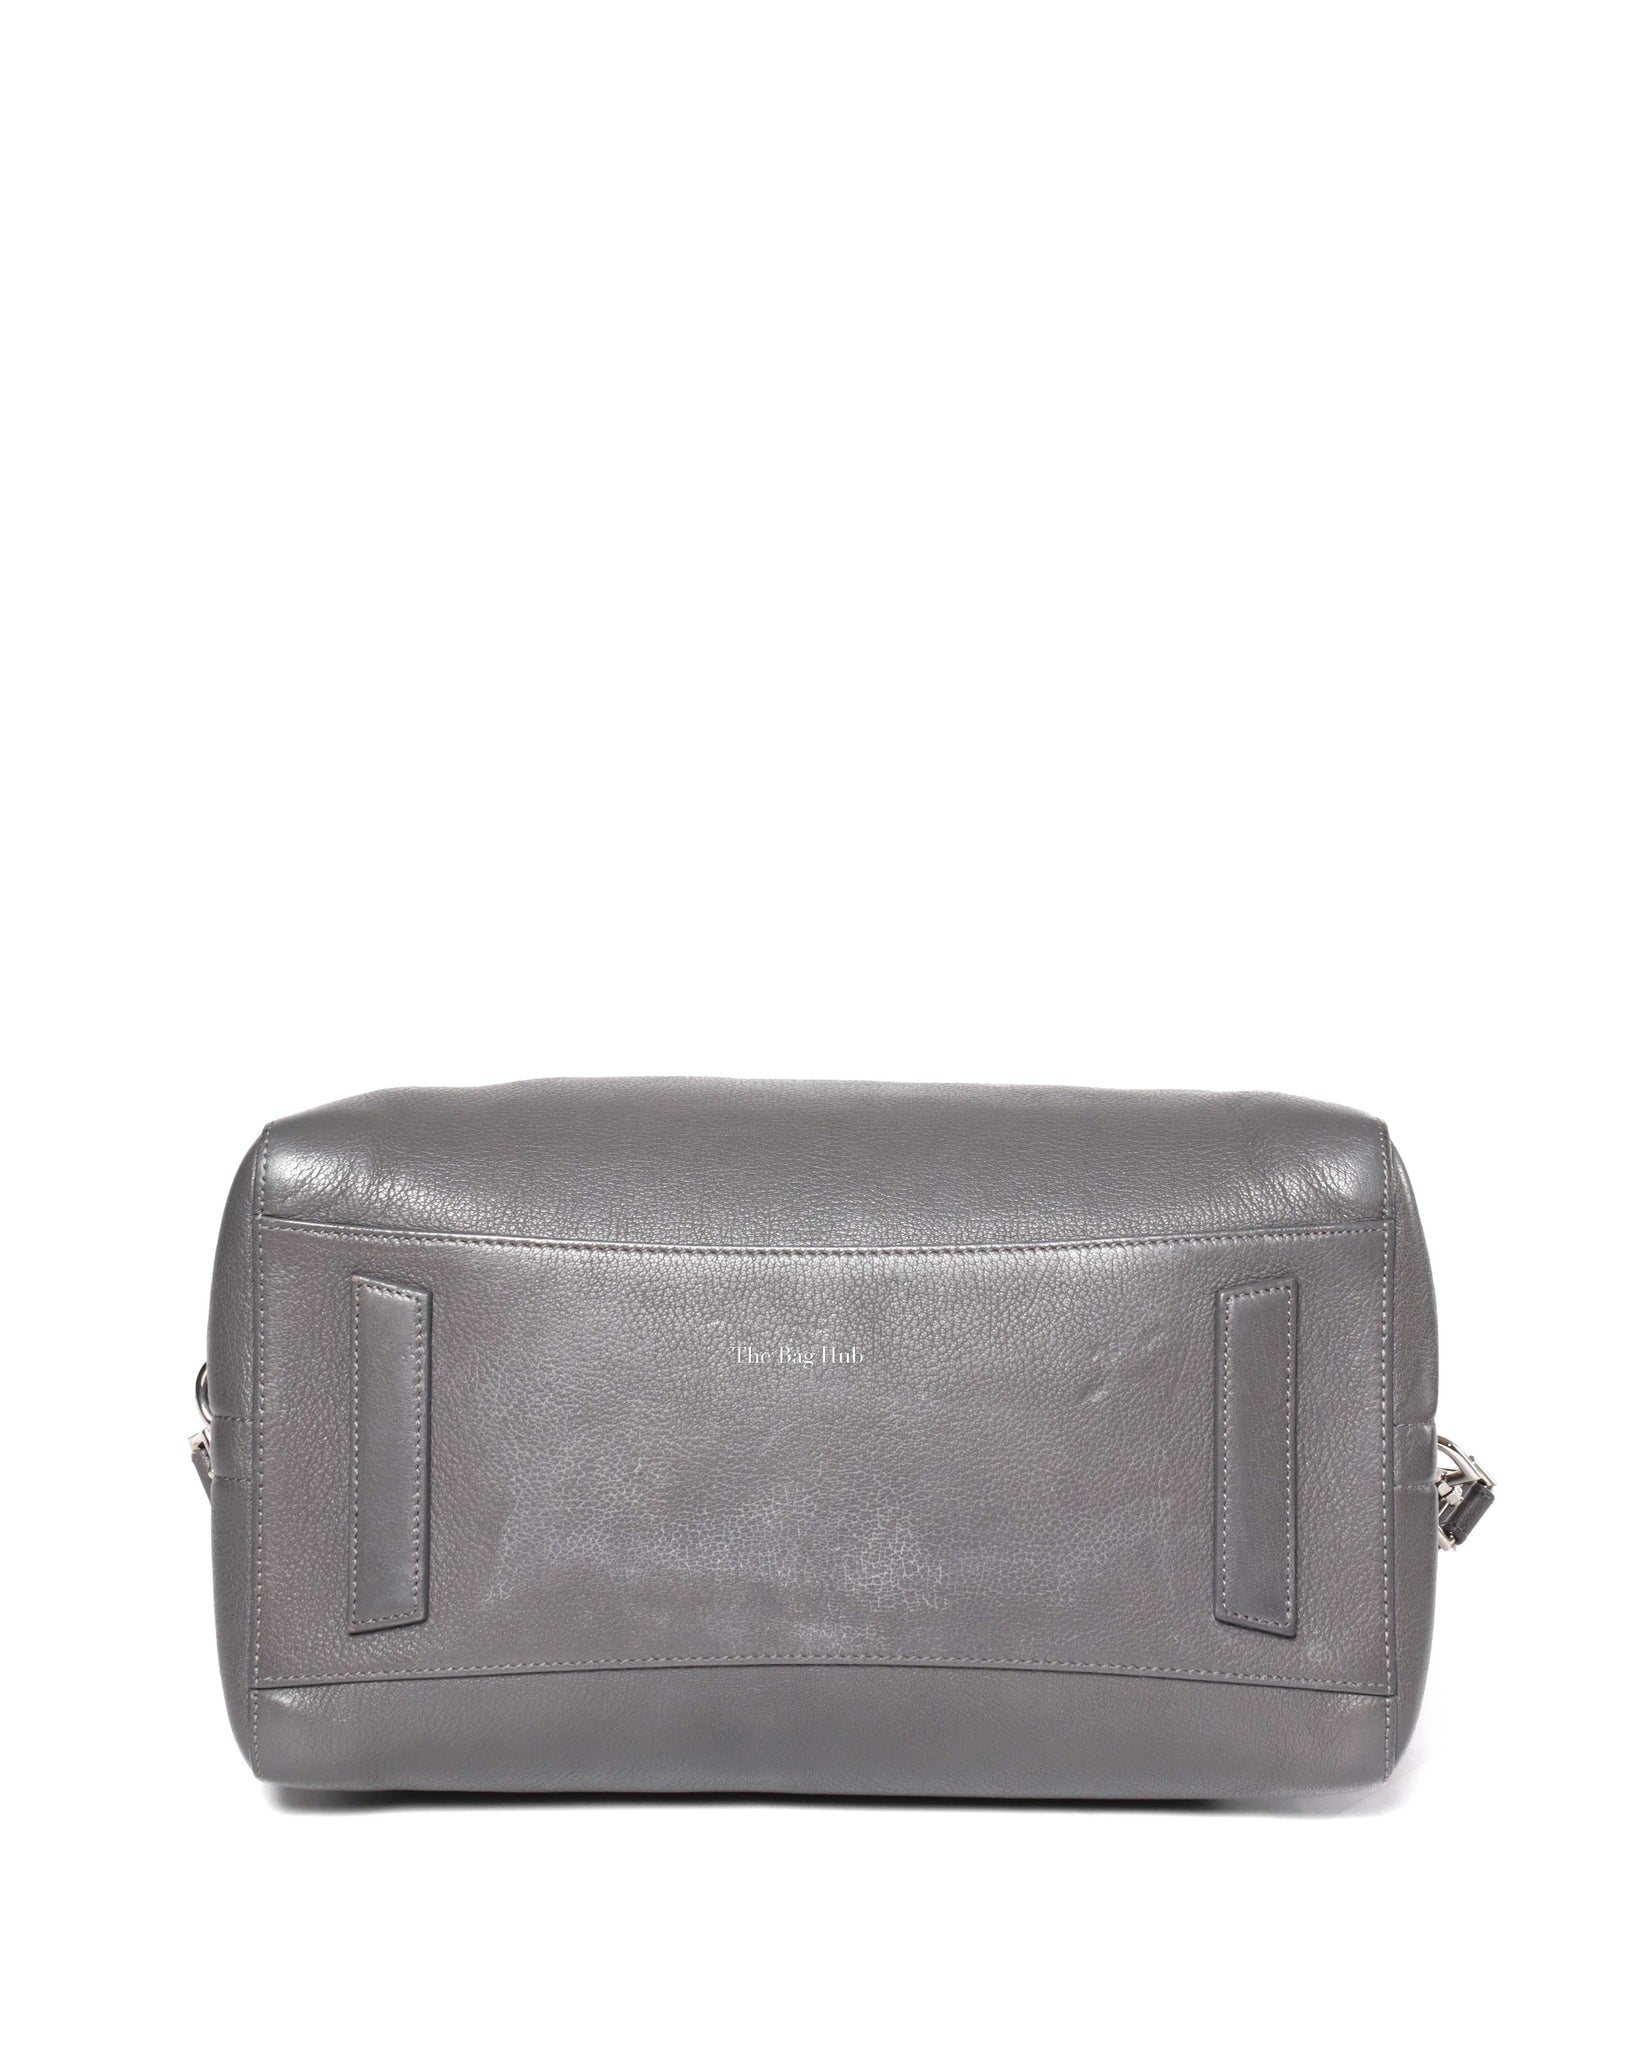 Givenchy Grey Leather Medium Antigona Bag-6